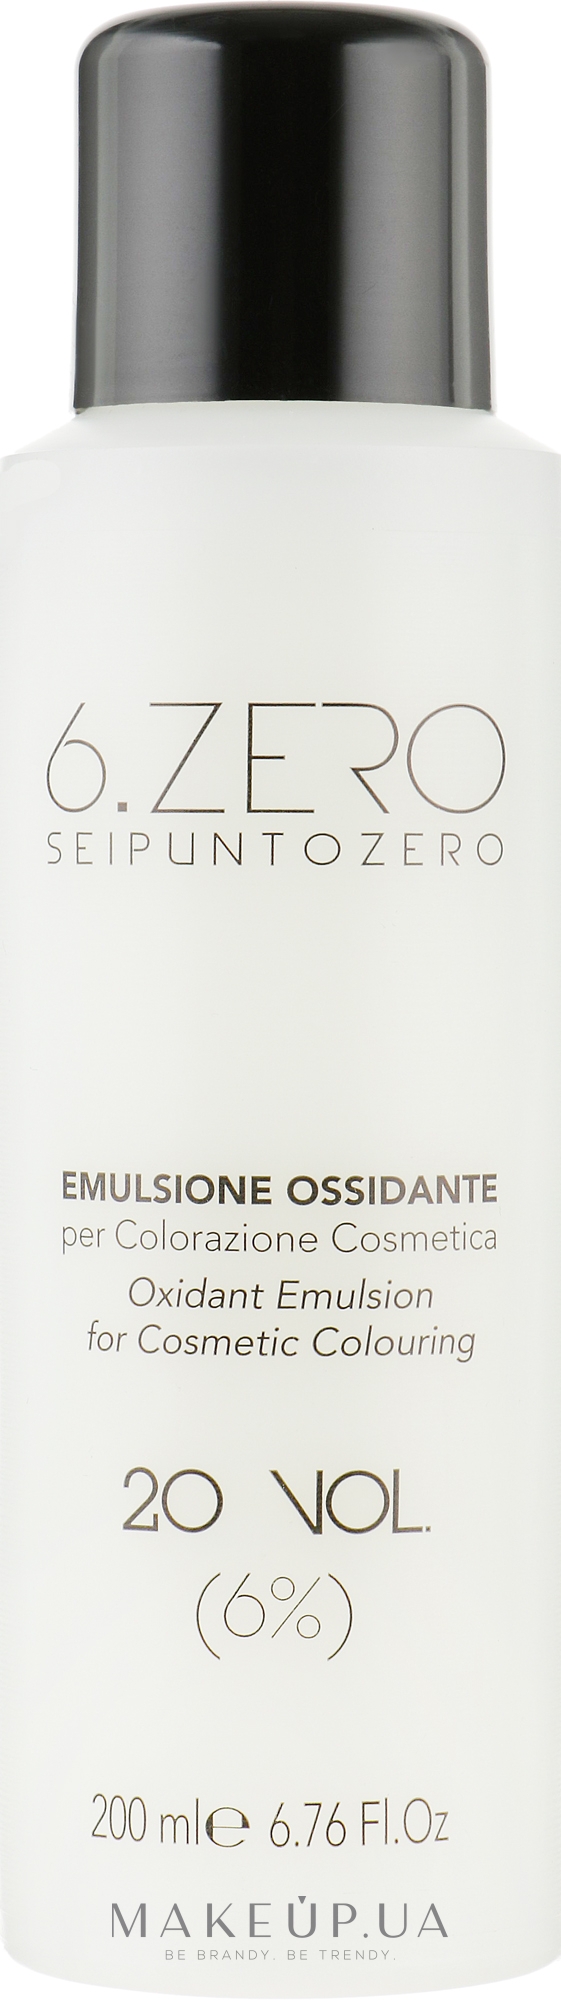 Окиснювальна емульсія - Seipuntozero Scented Oxidant Emulsion 20 Volumes 6% — фото 200ml